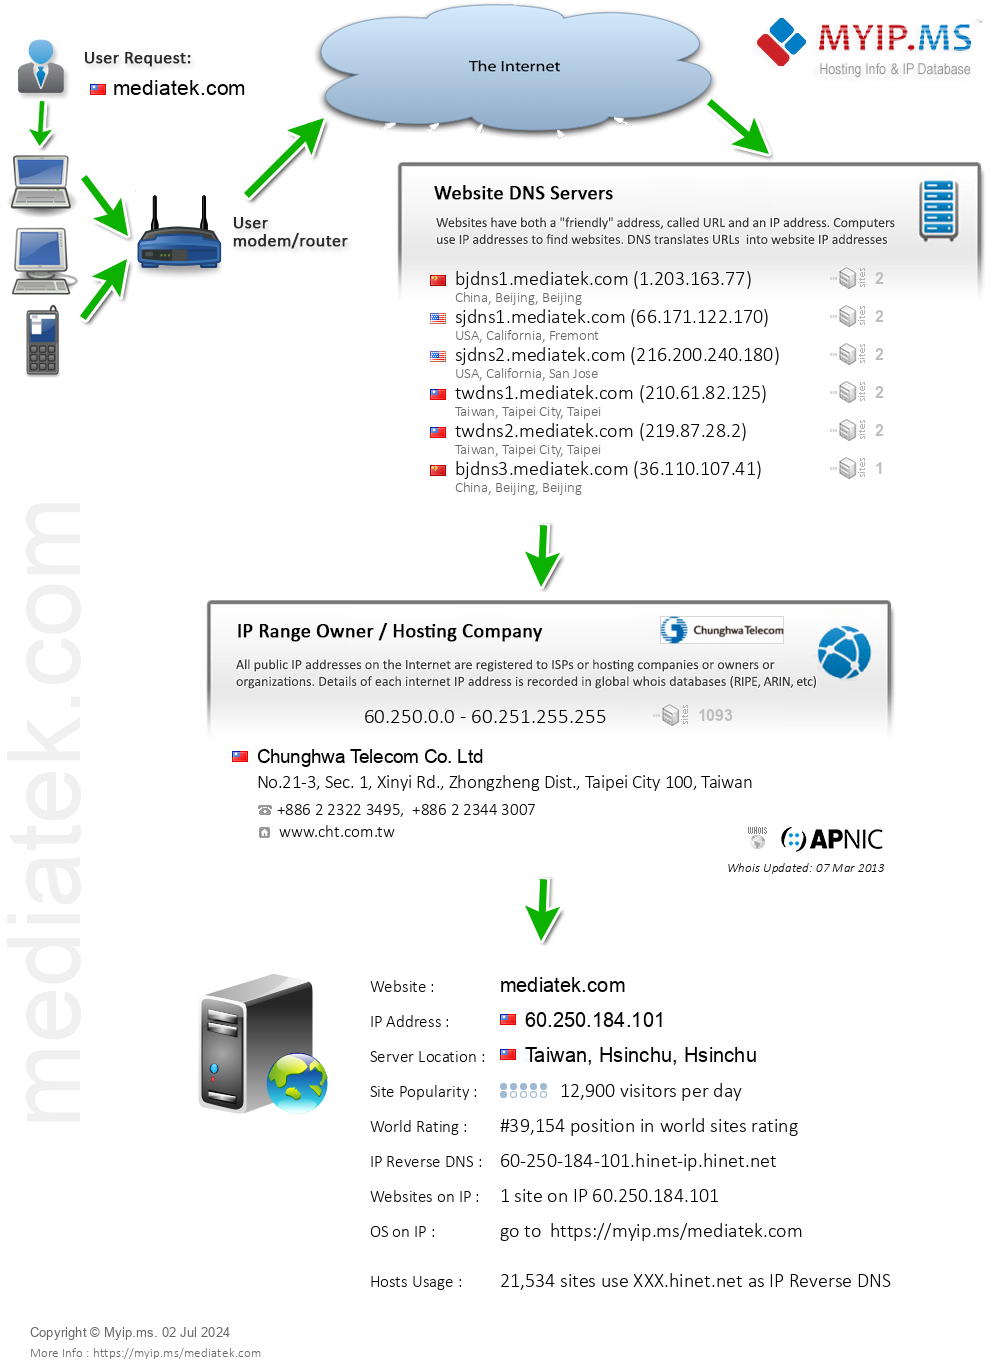 Mediatek.com - Website Hosting Visual IP Diagram